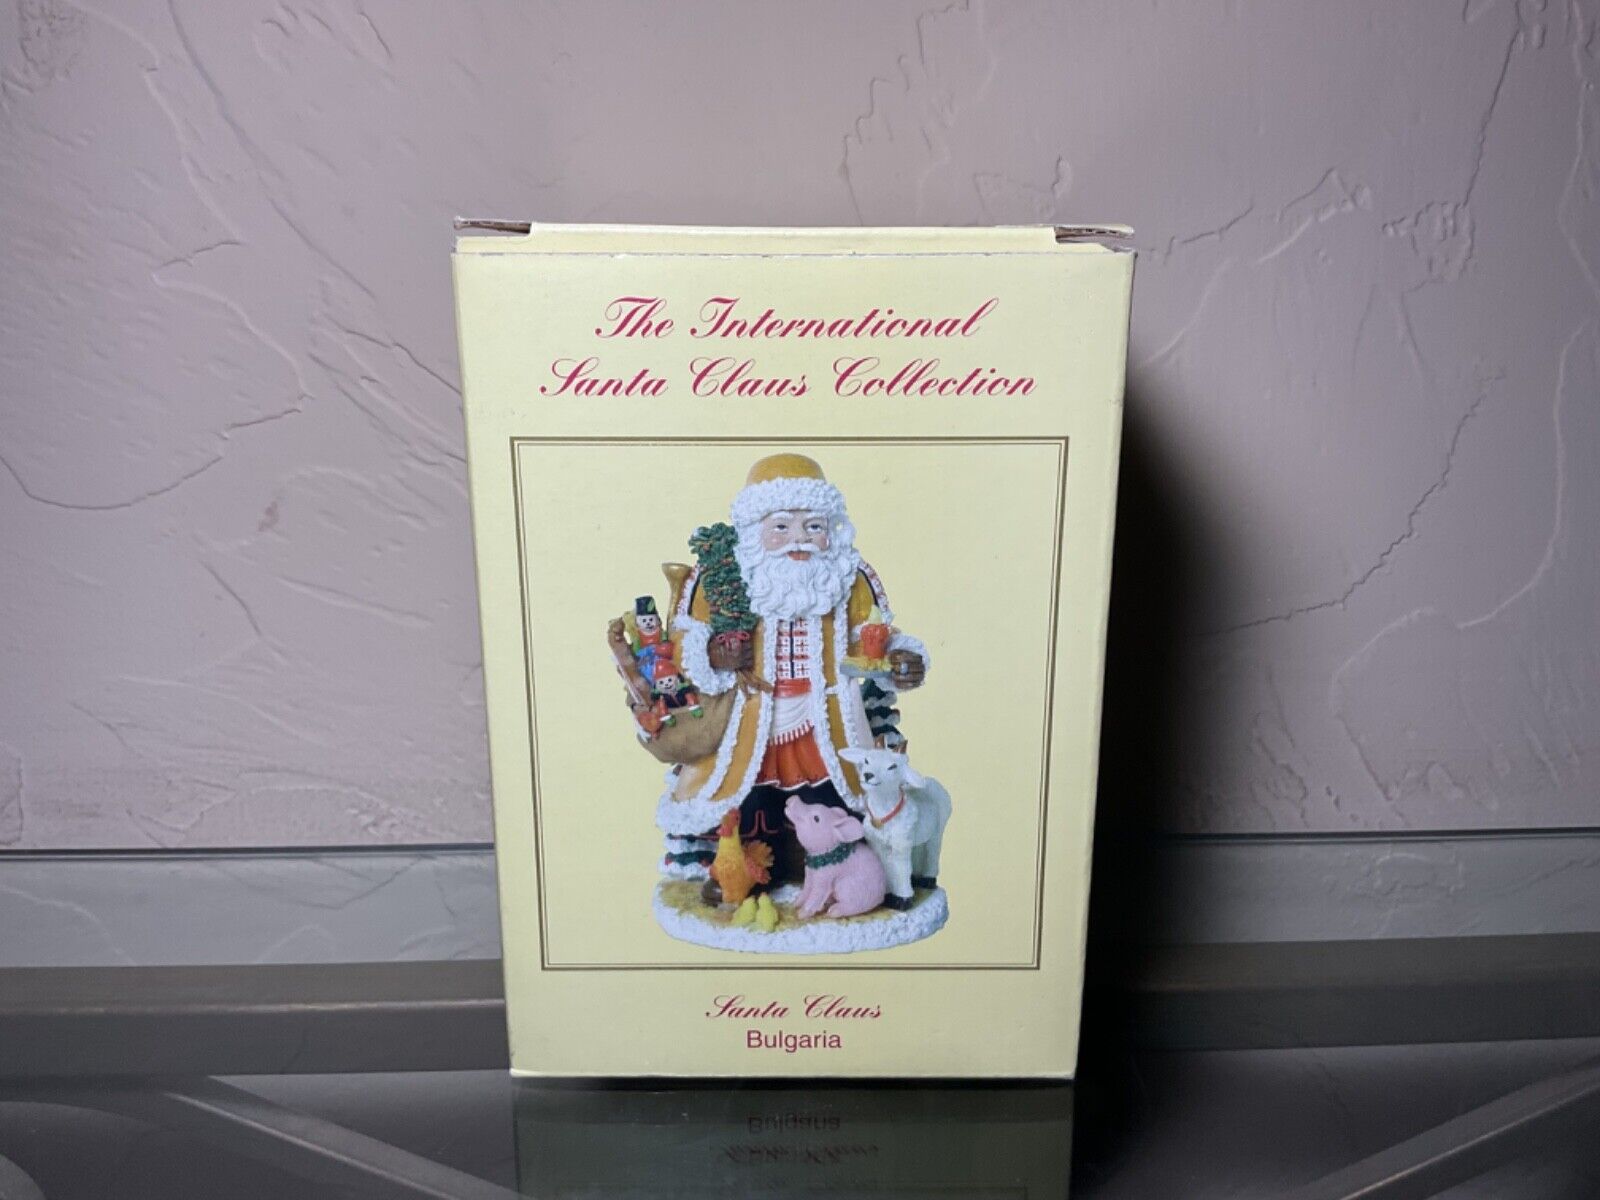 The International Santa Claus Collection “Santa Claus” Bulgaria 2004